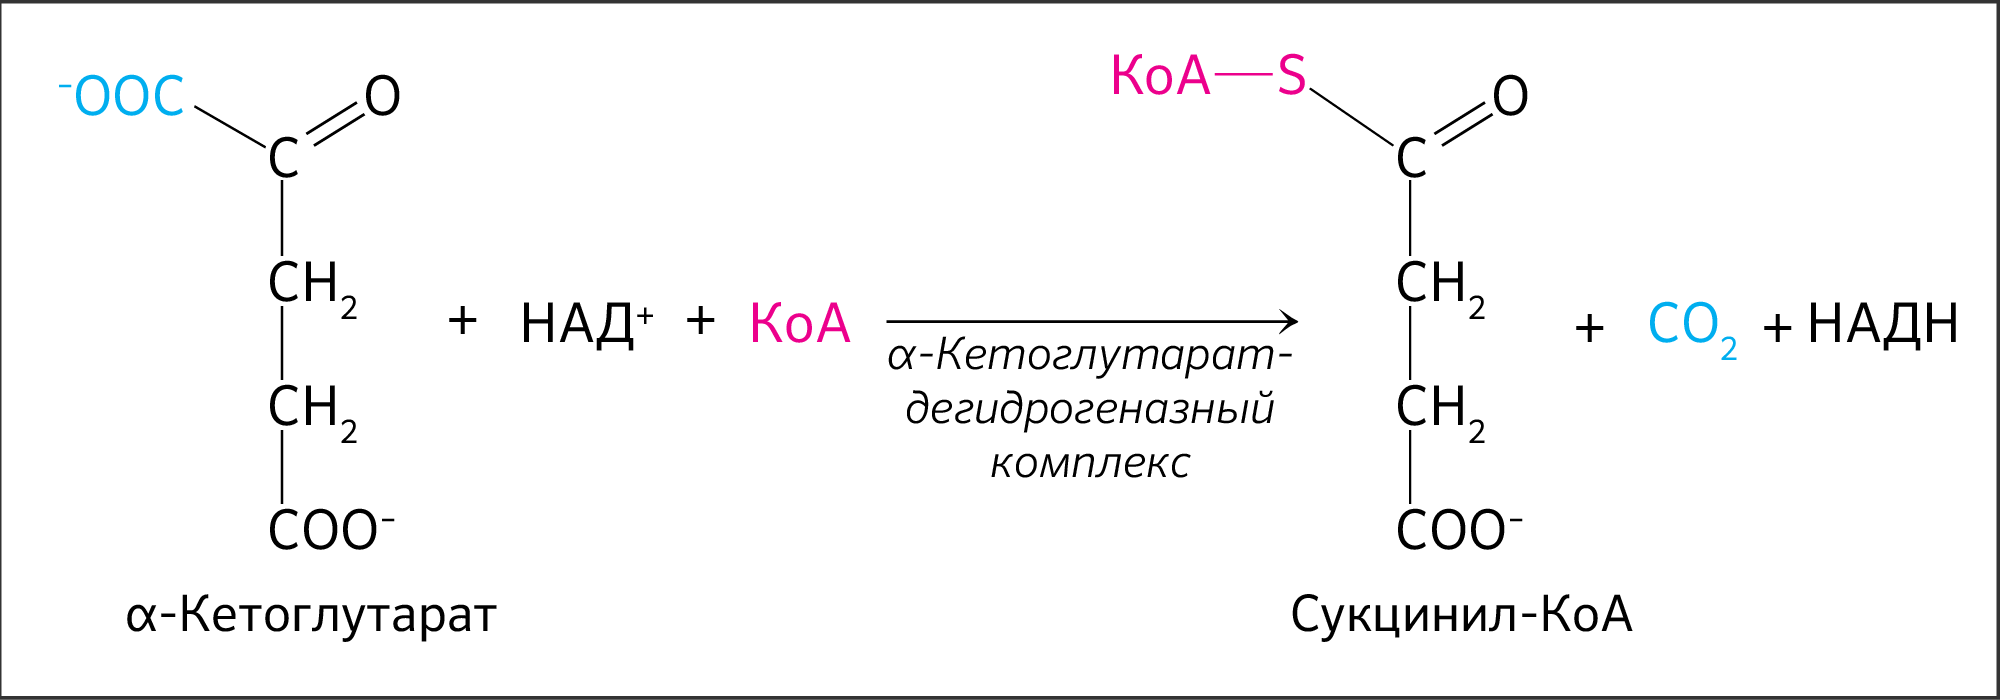 Гравураш ду коа. Альфа-кетоглутарат сукцинат КОА. Окисление α-кетоглутарата до сукцинил-КОА. Альфа кетоглутарат окисление. Альфа кетоглутарат в сукцинил фермент.